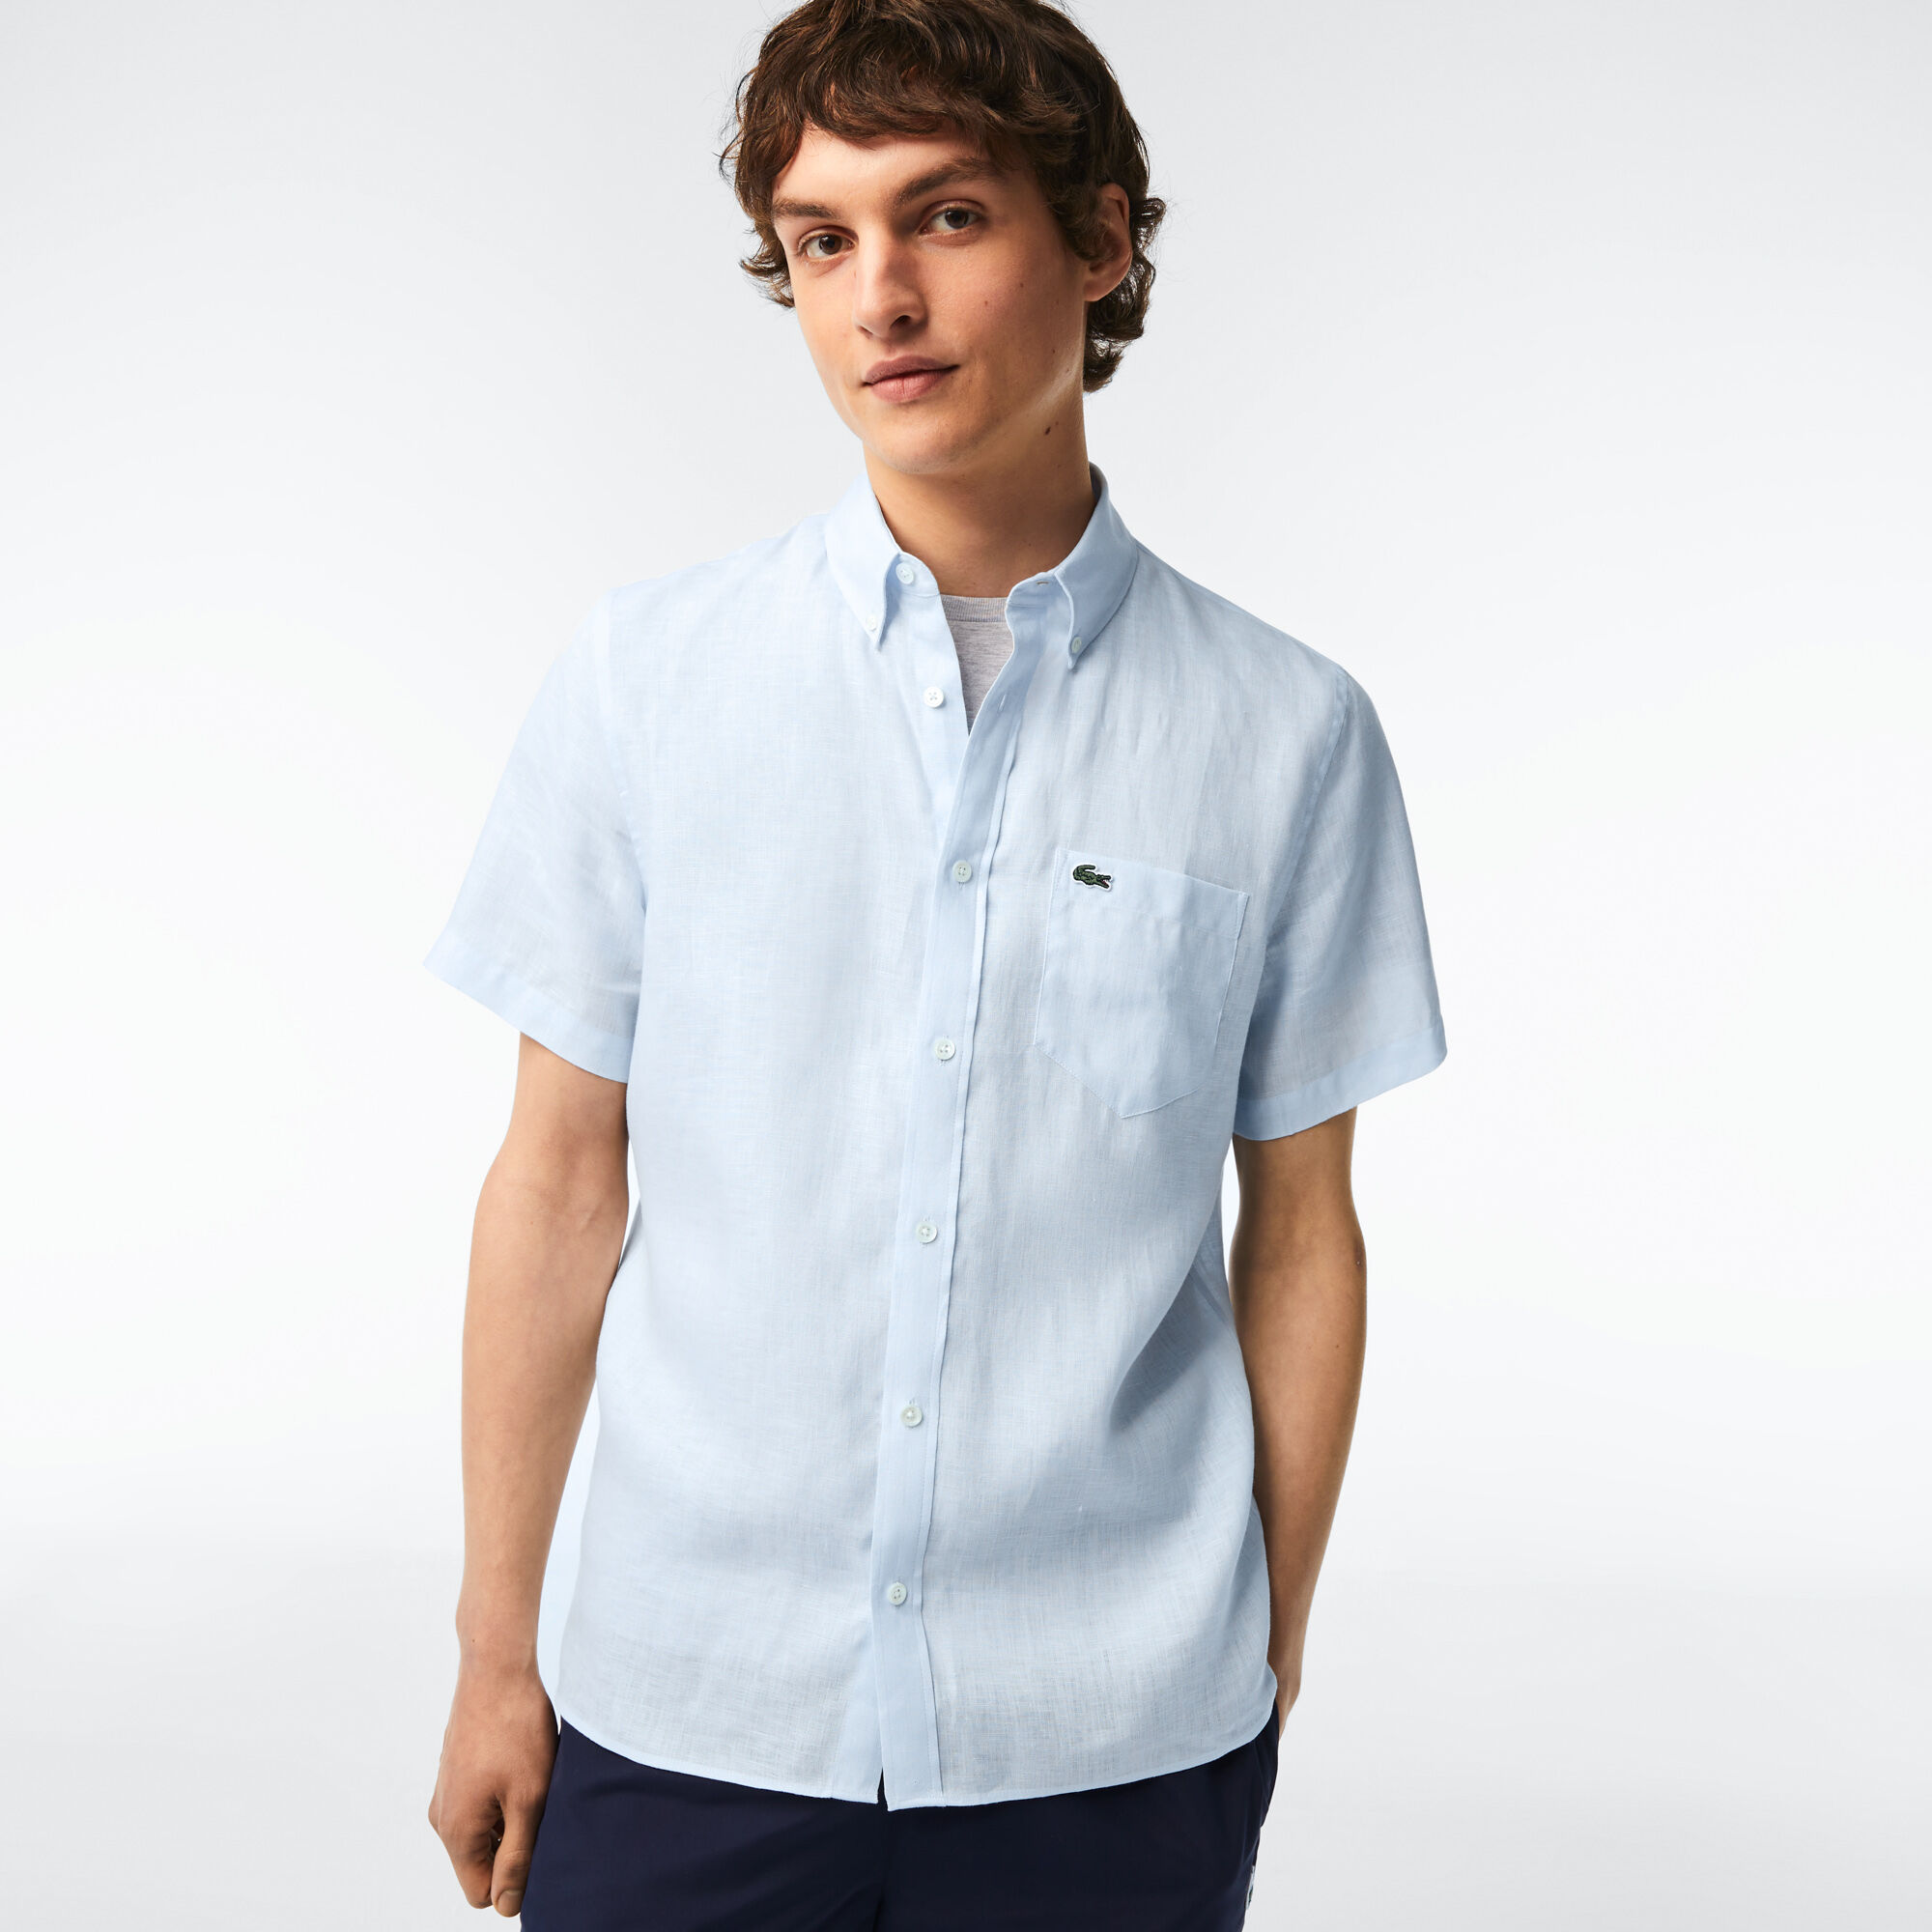 Men's Long Sleeves Shirts | Buy Lacoste Men' Shirts | Lacoste UAE